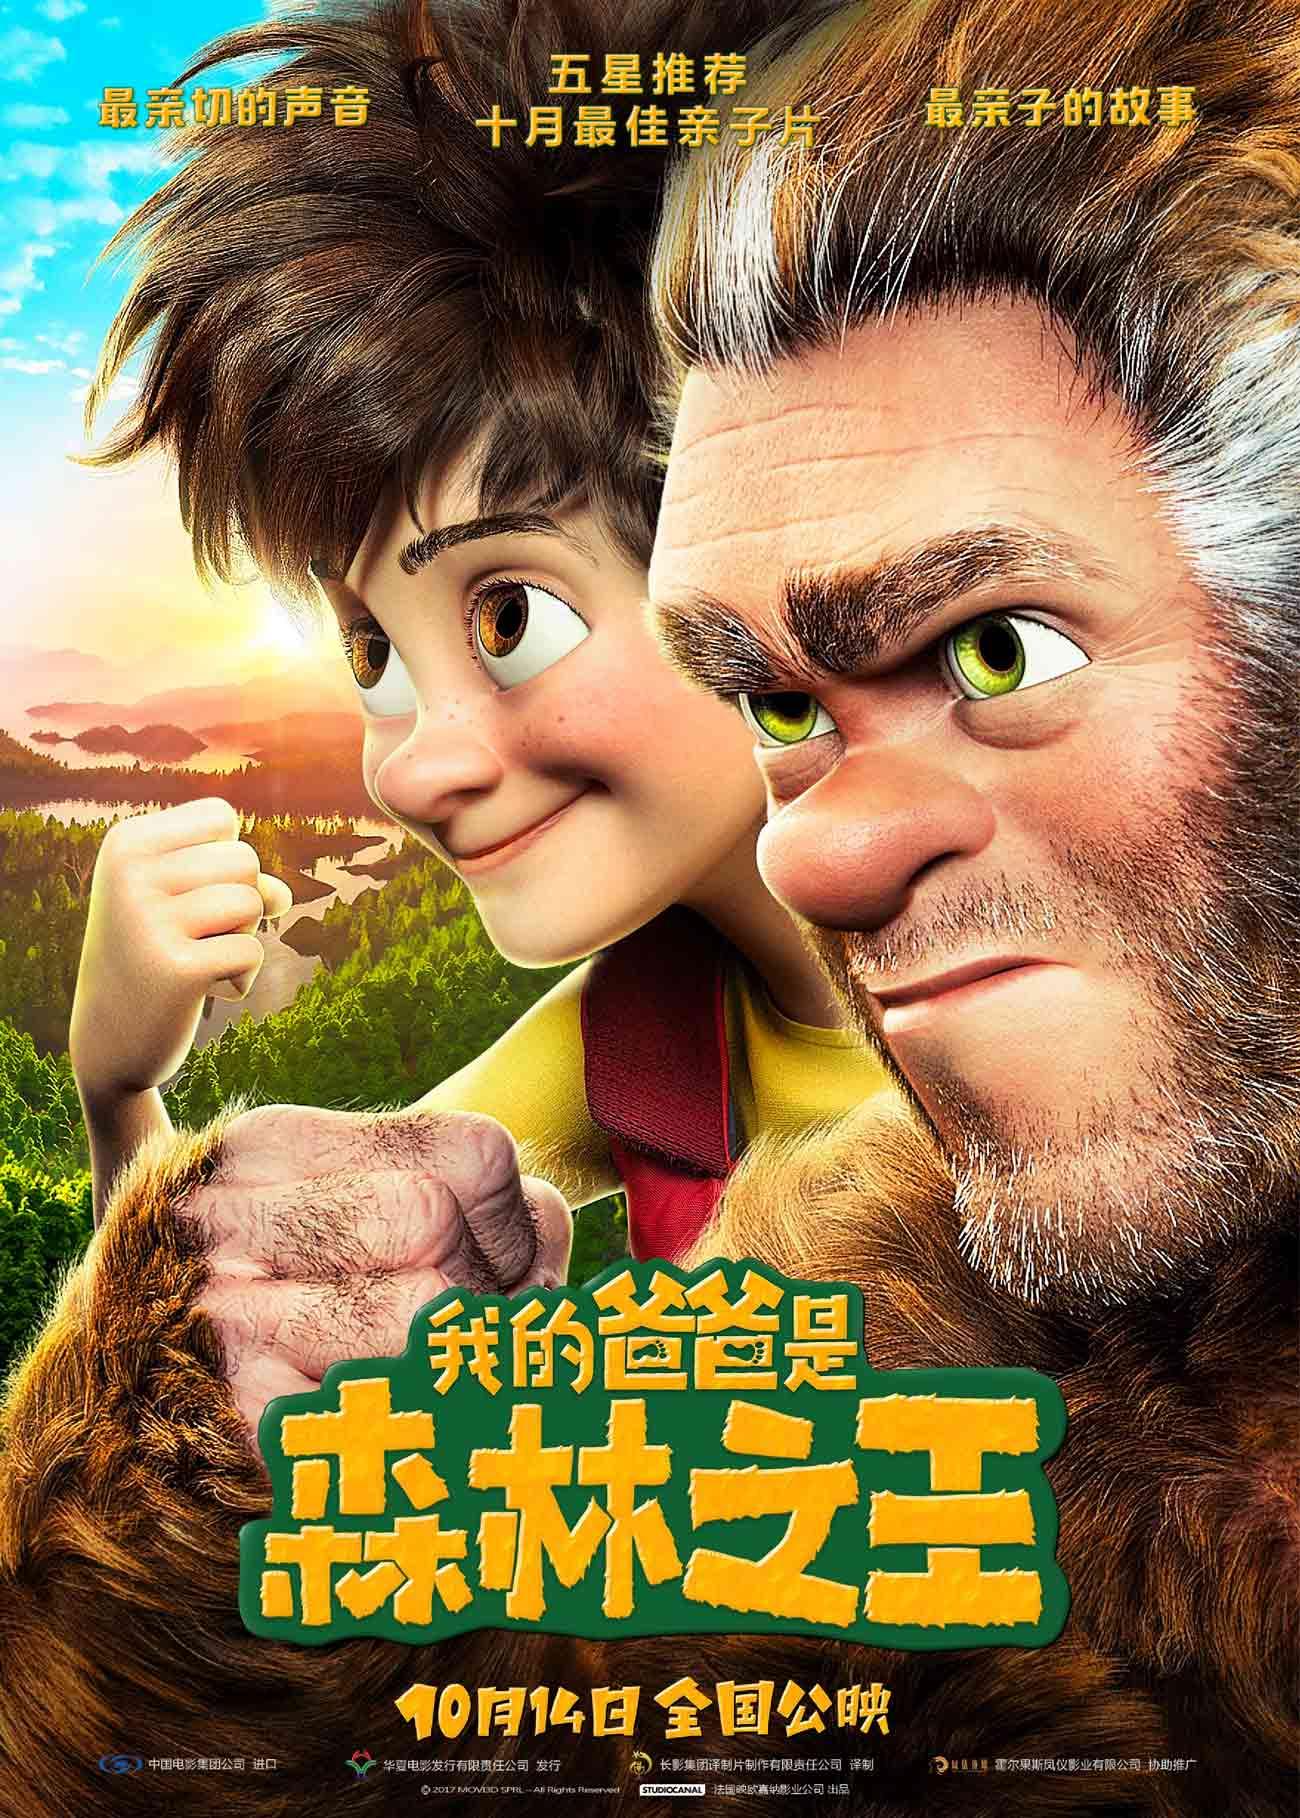 Постер фильма Стань легендой! Бигфут Младший | Son of Bigfoot